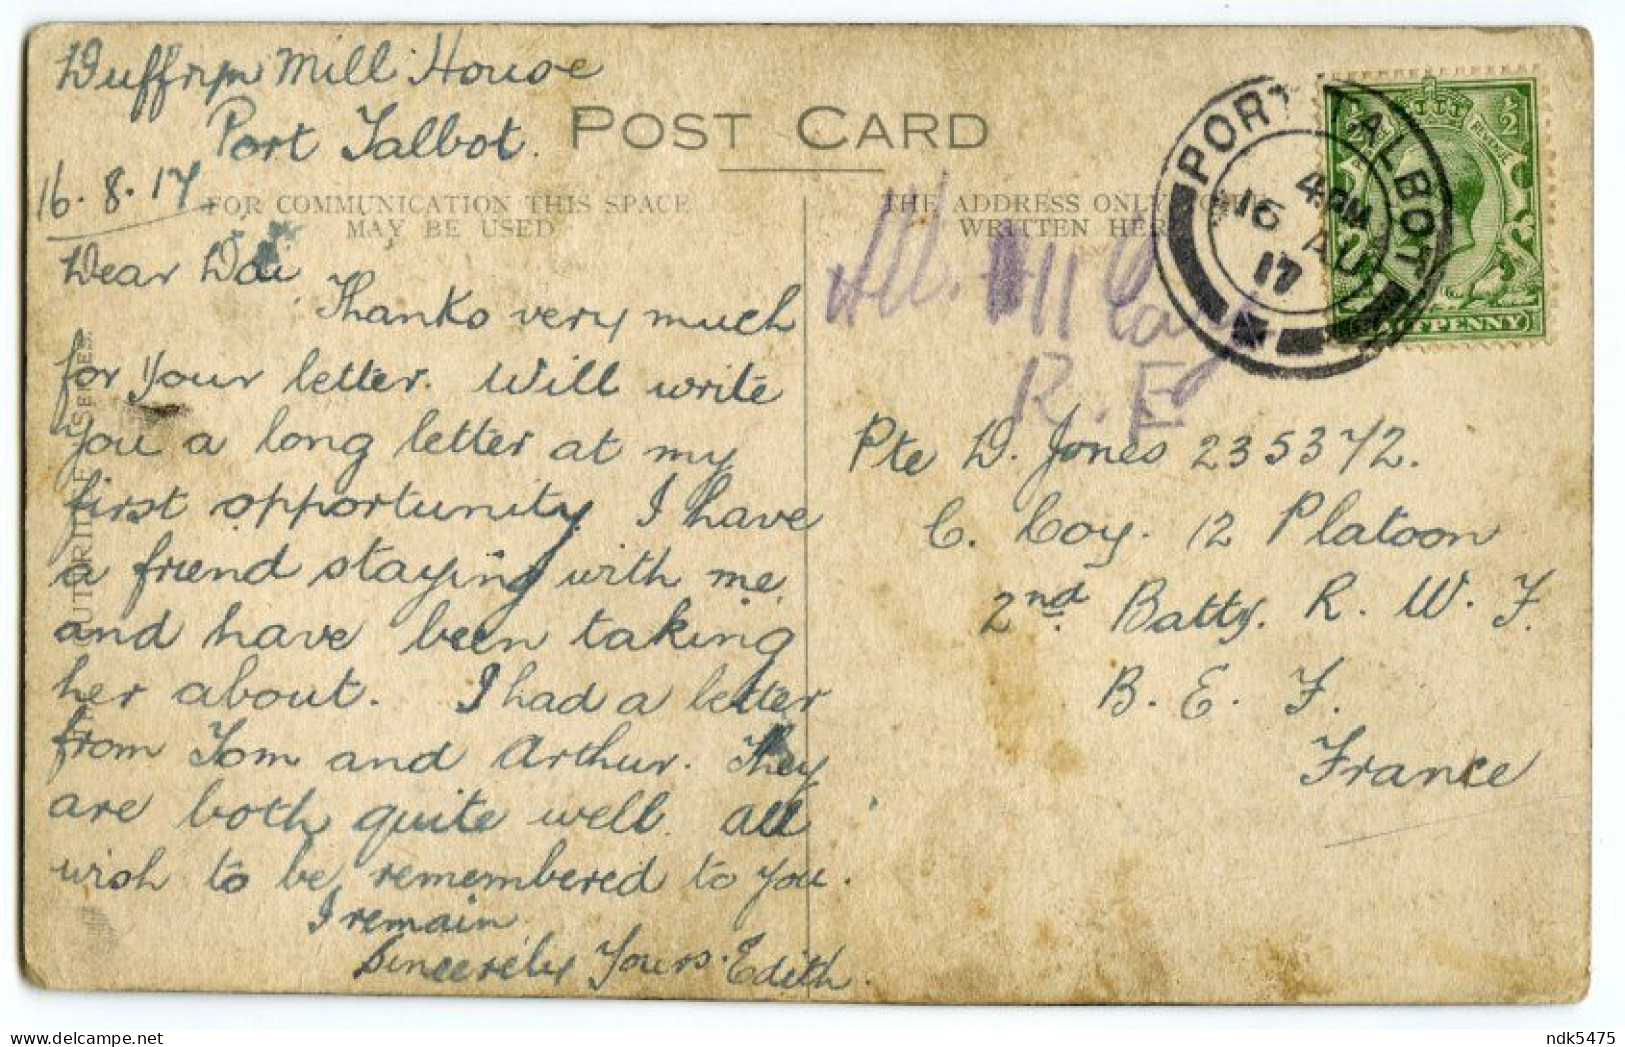 PORT TALBOT - DUFFRYN VALLEY / DUFFRYN MILL HOUSE / ROYAL WELSH FUSILIERS, 1917, (JONES) - Glamorgan